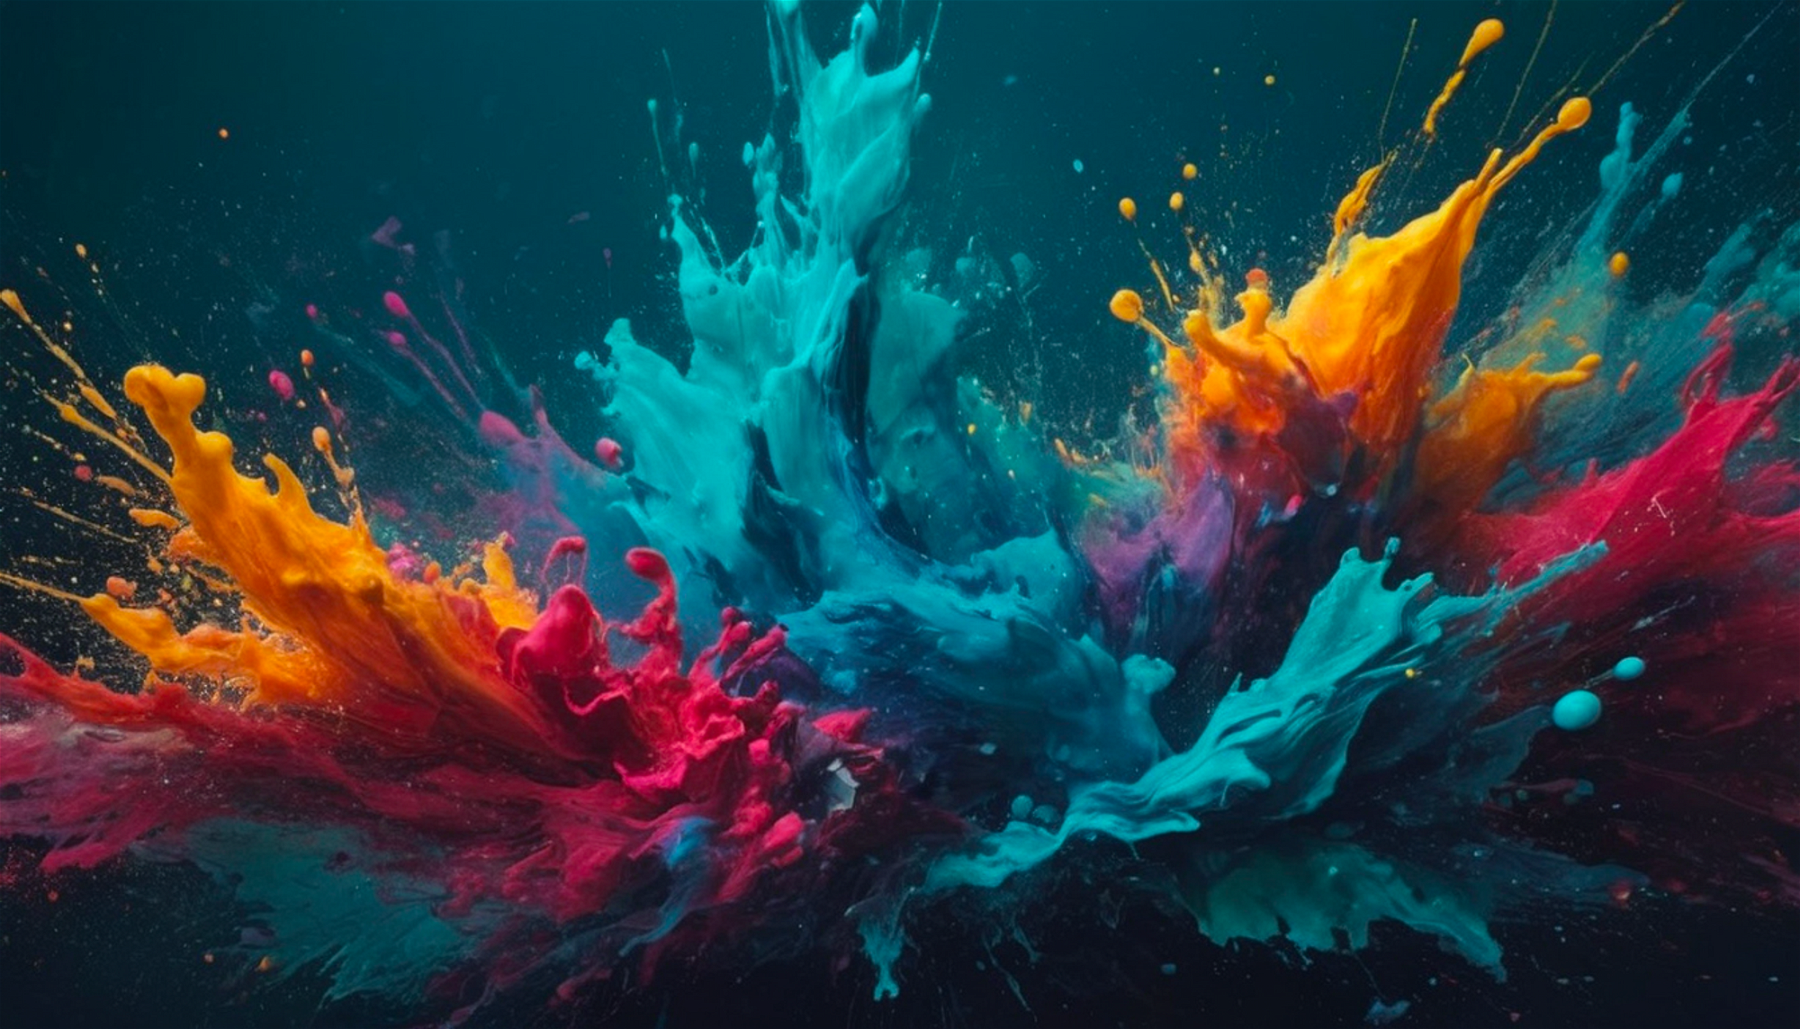 explosive paint splash of mediumorchid and teal gradient color wallpaper, vibrant contrast